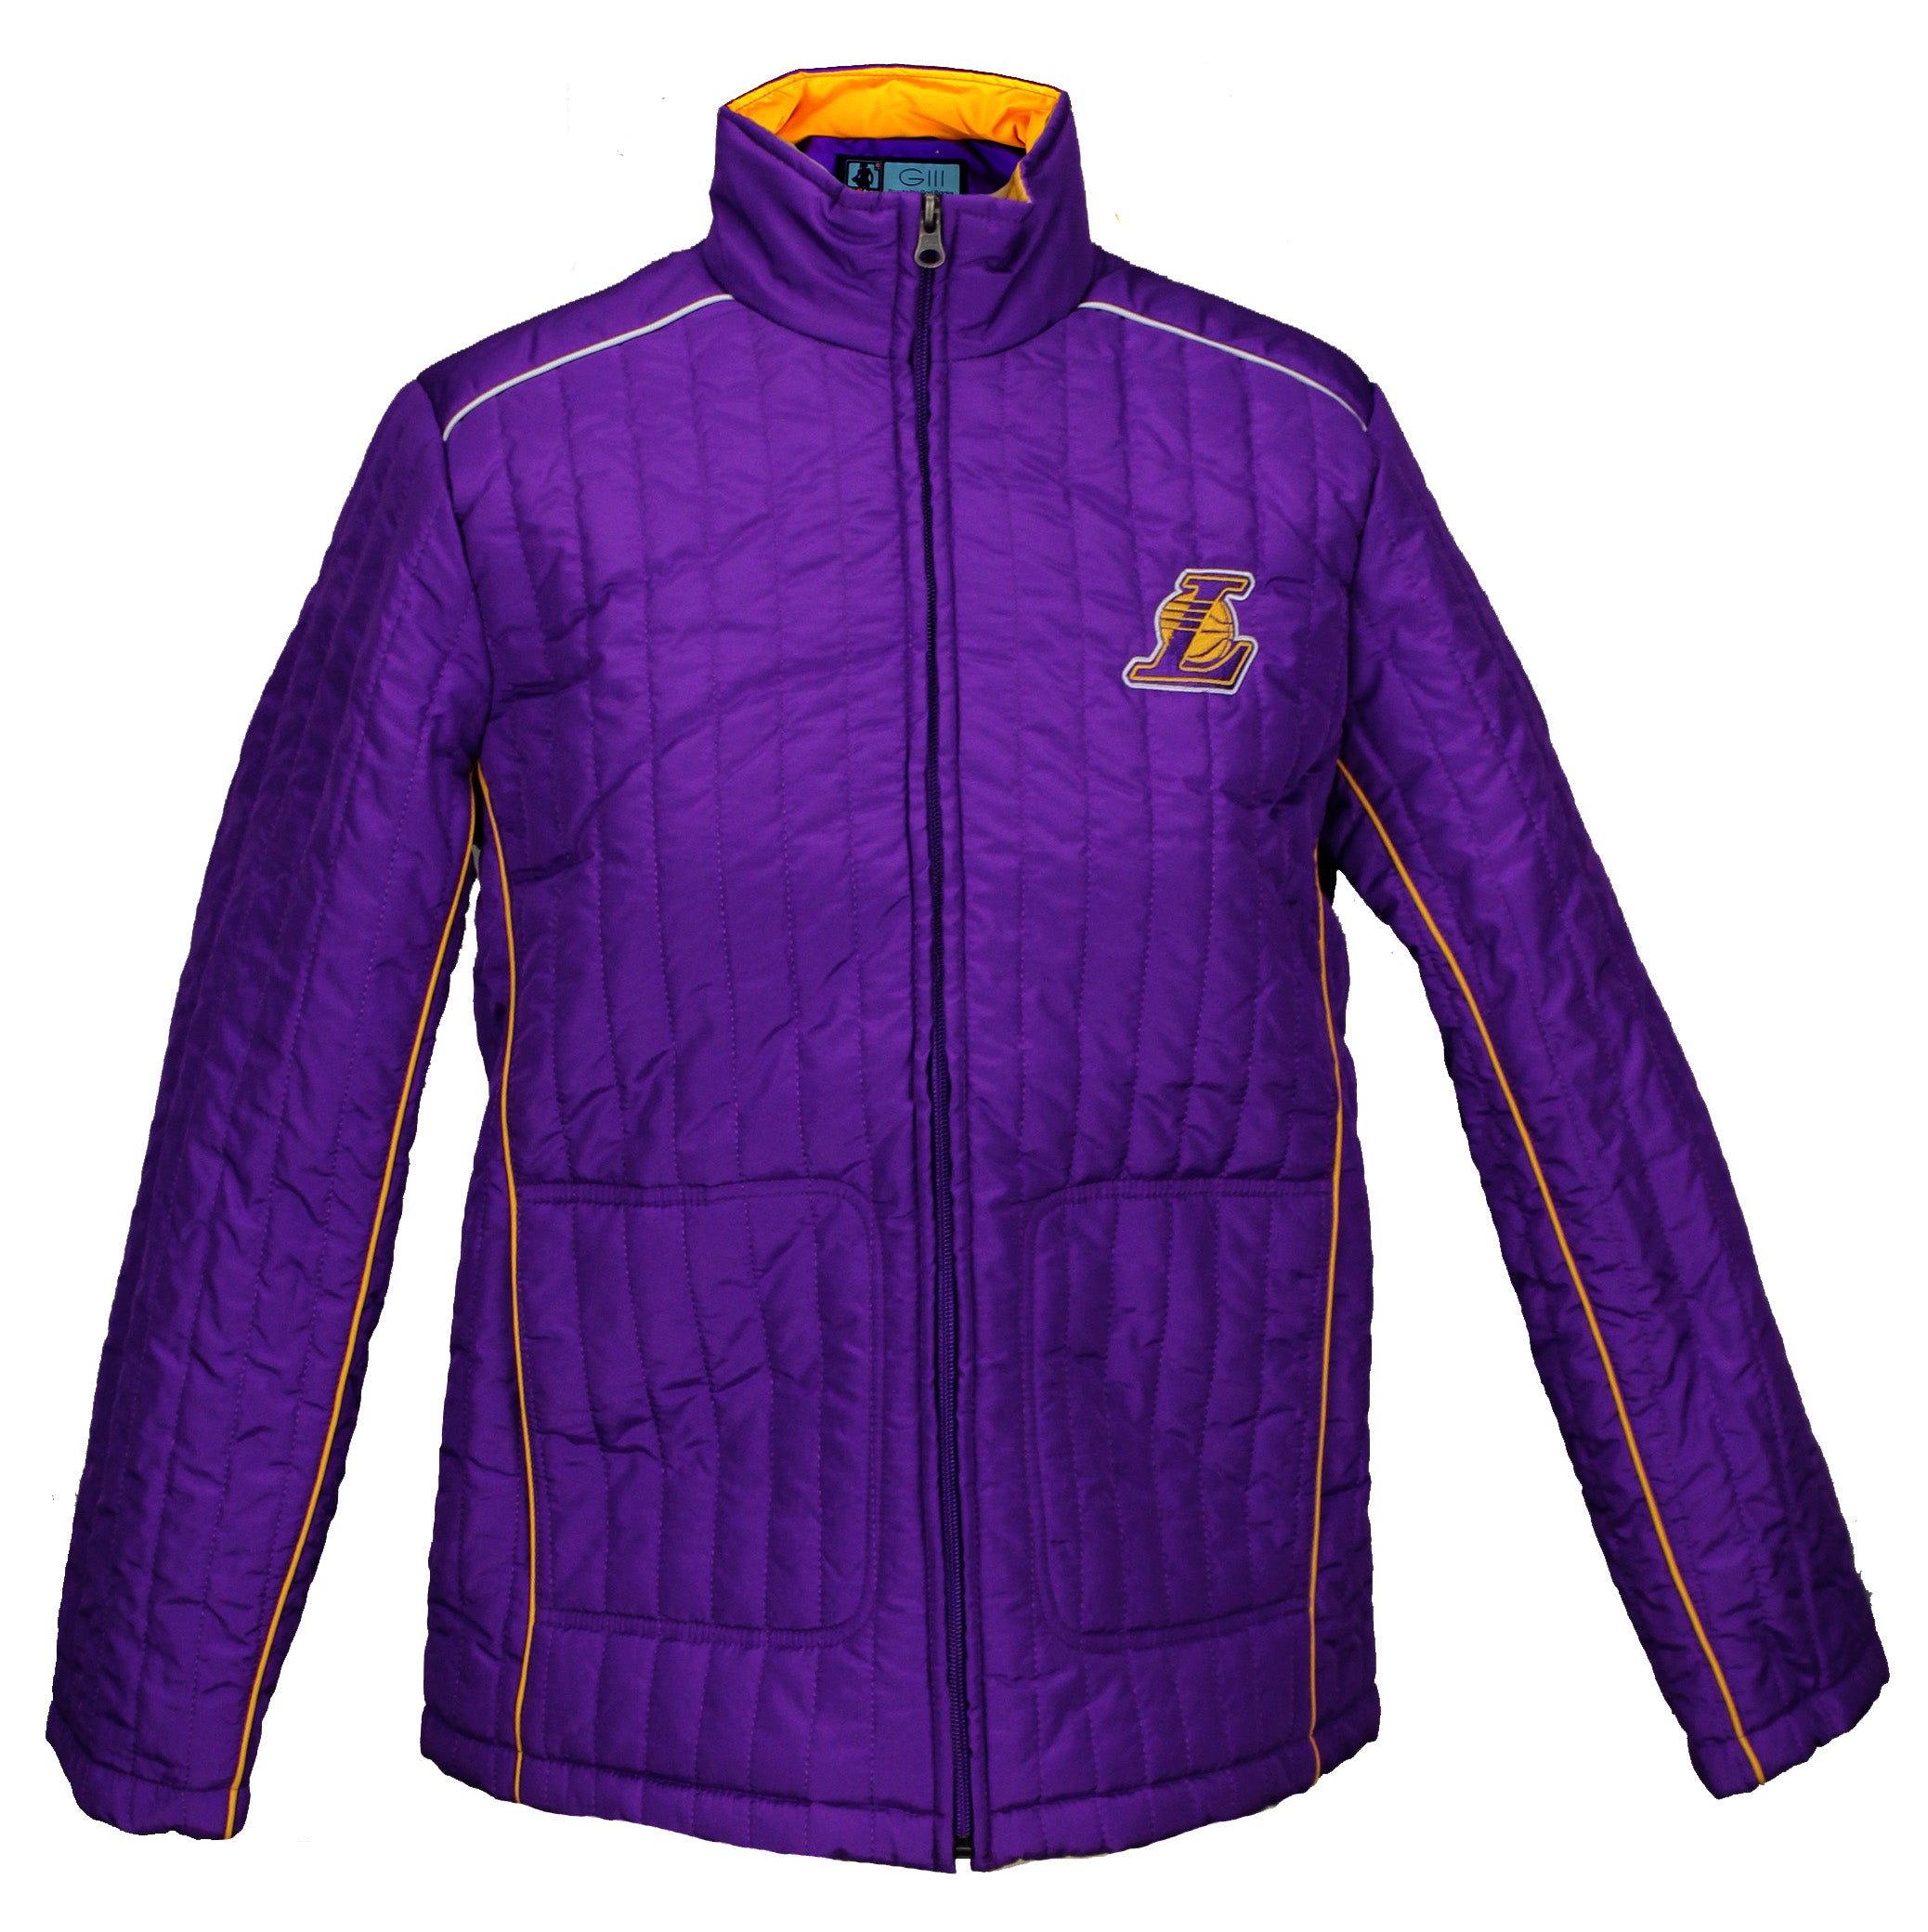 G-III Sports NBA Women's Los Angeles Lakers Players Zip Up Jacket Coat, Purple